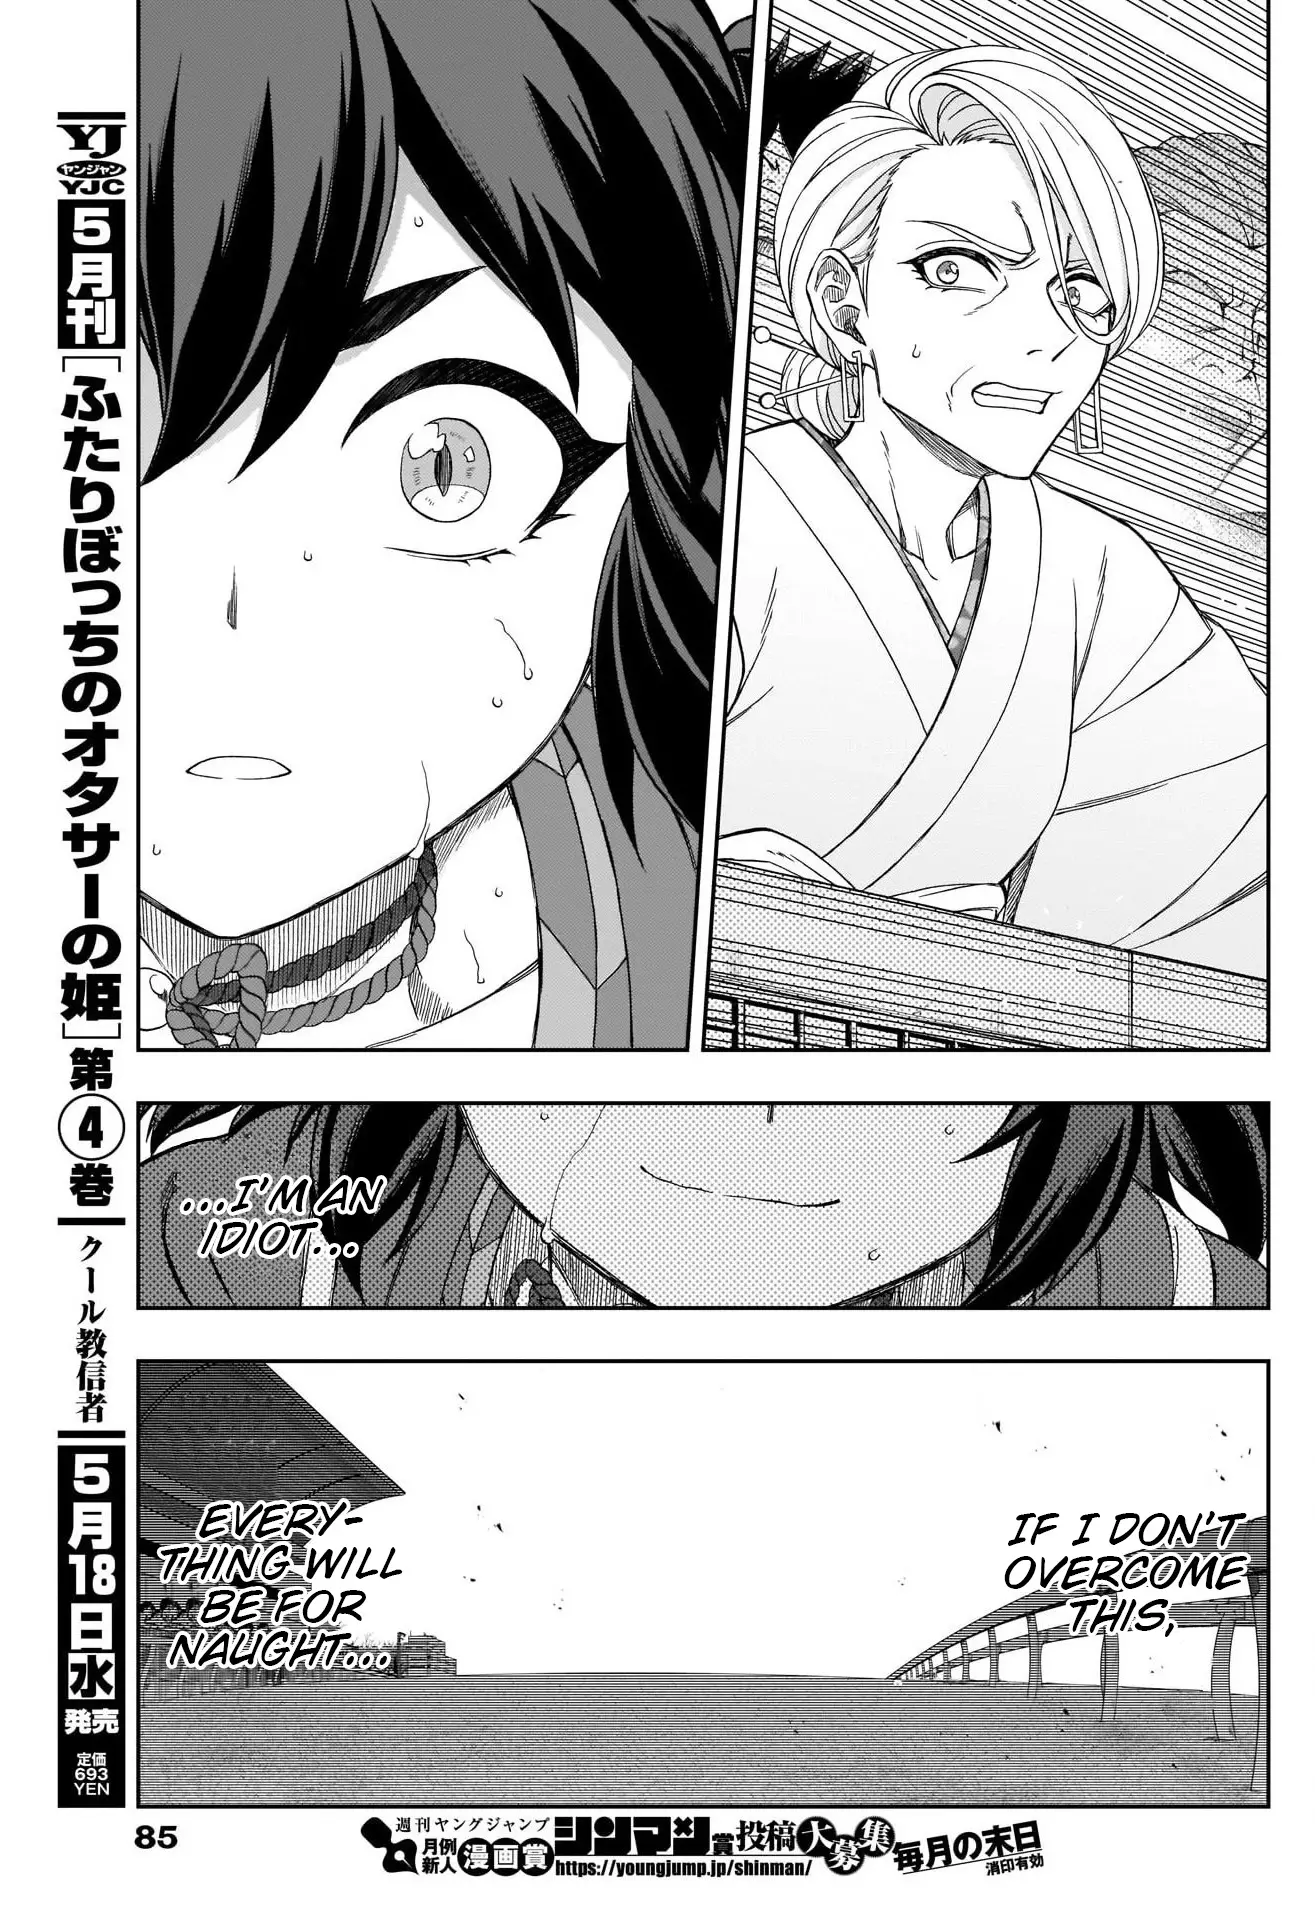 Uma Musume: Cinderella Gray - 78 page 15-4eb83d18